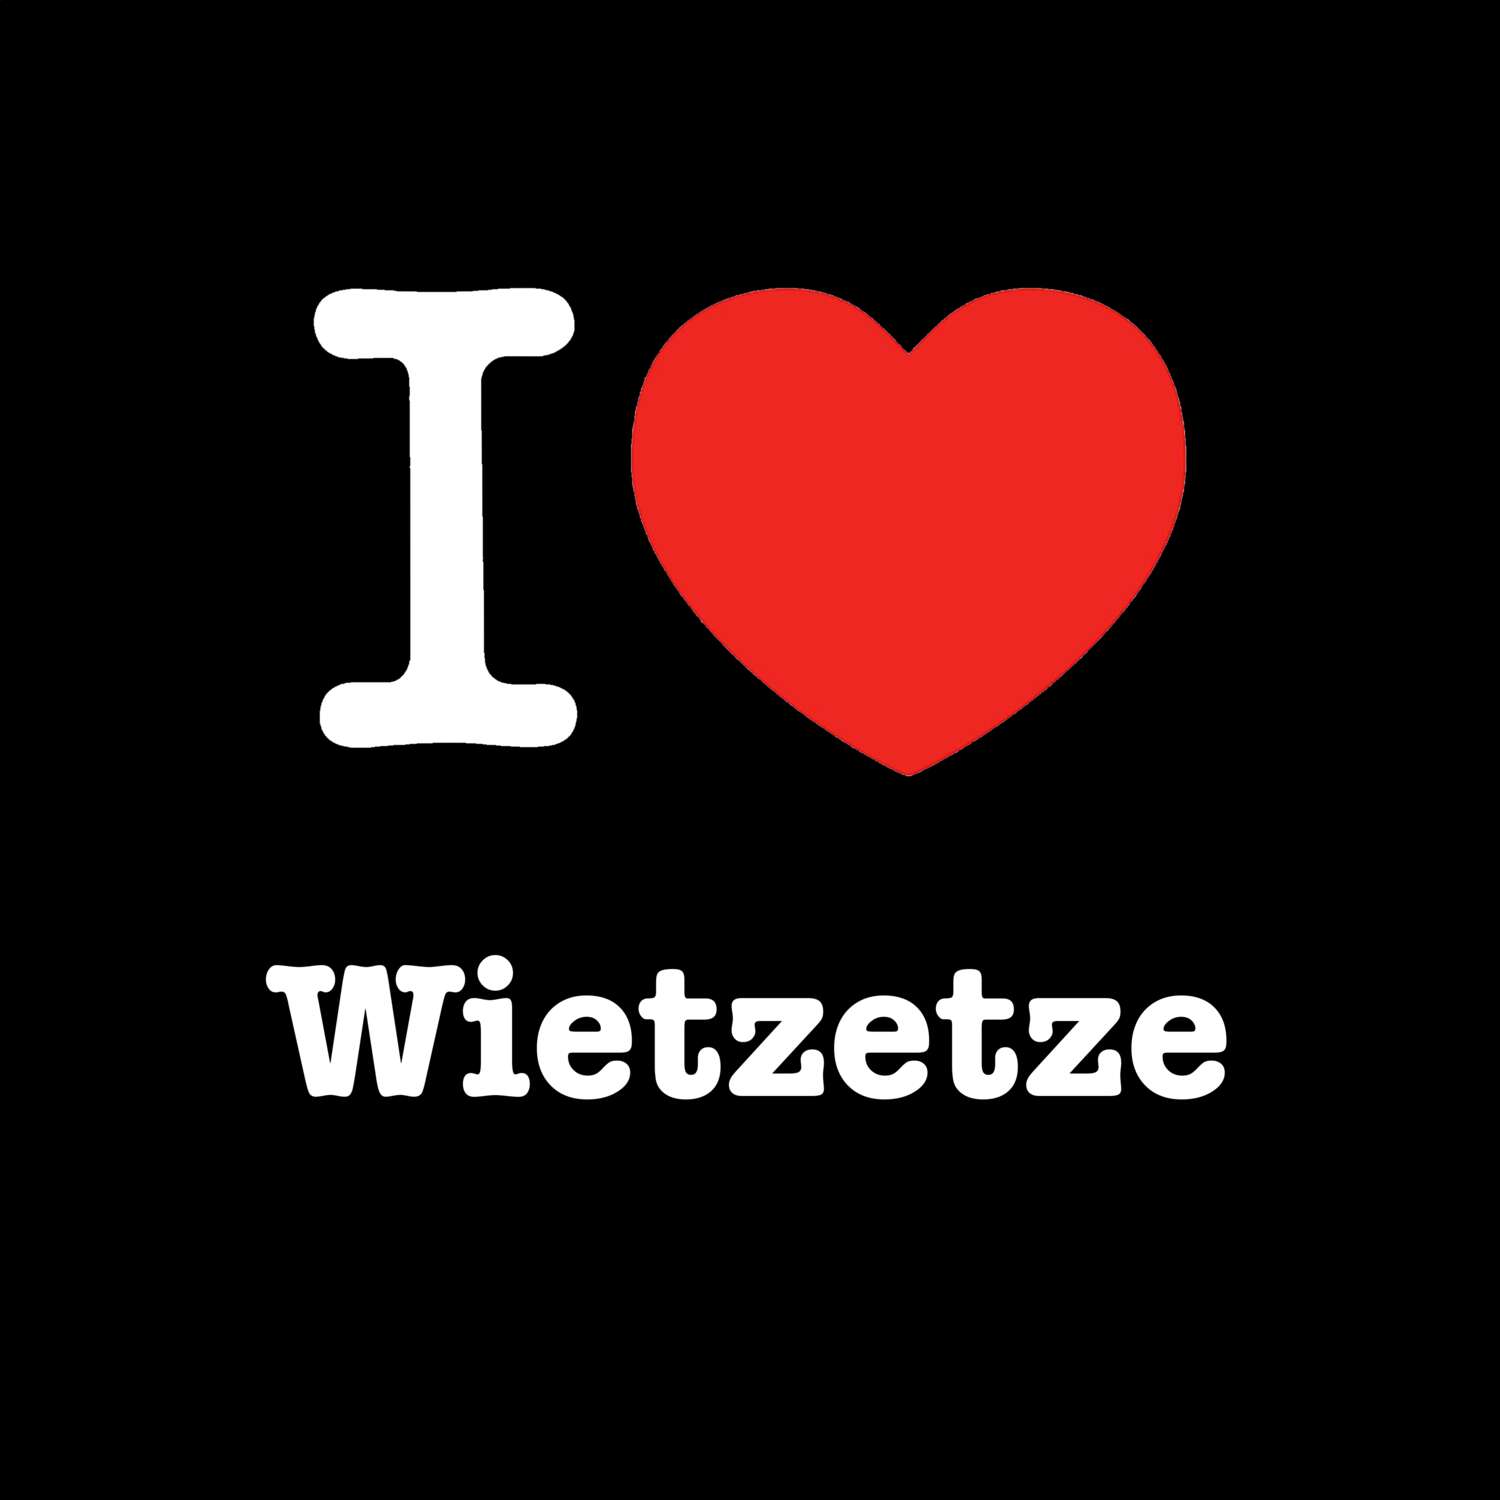 Wietzetze T-Shirt »I love«